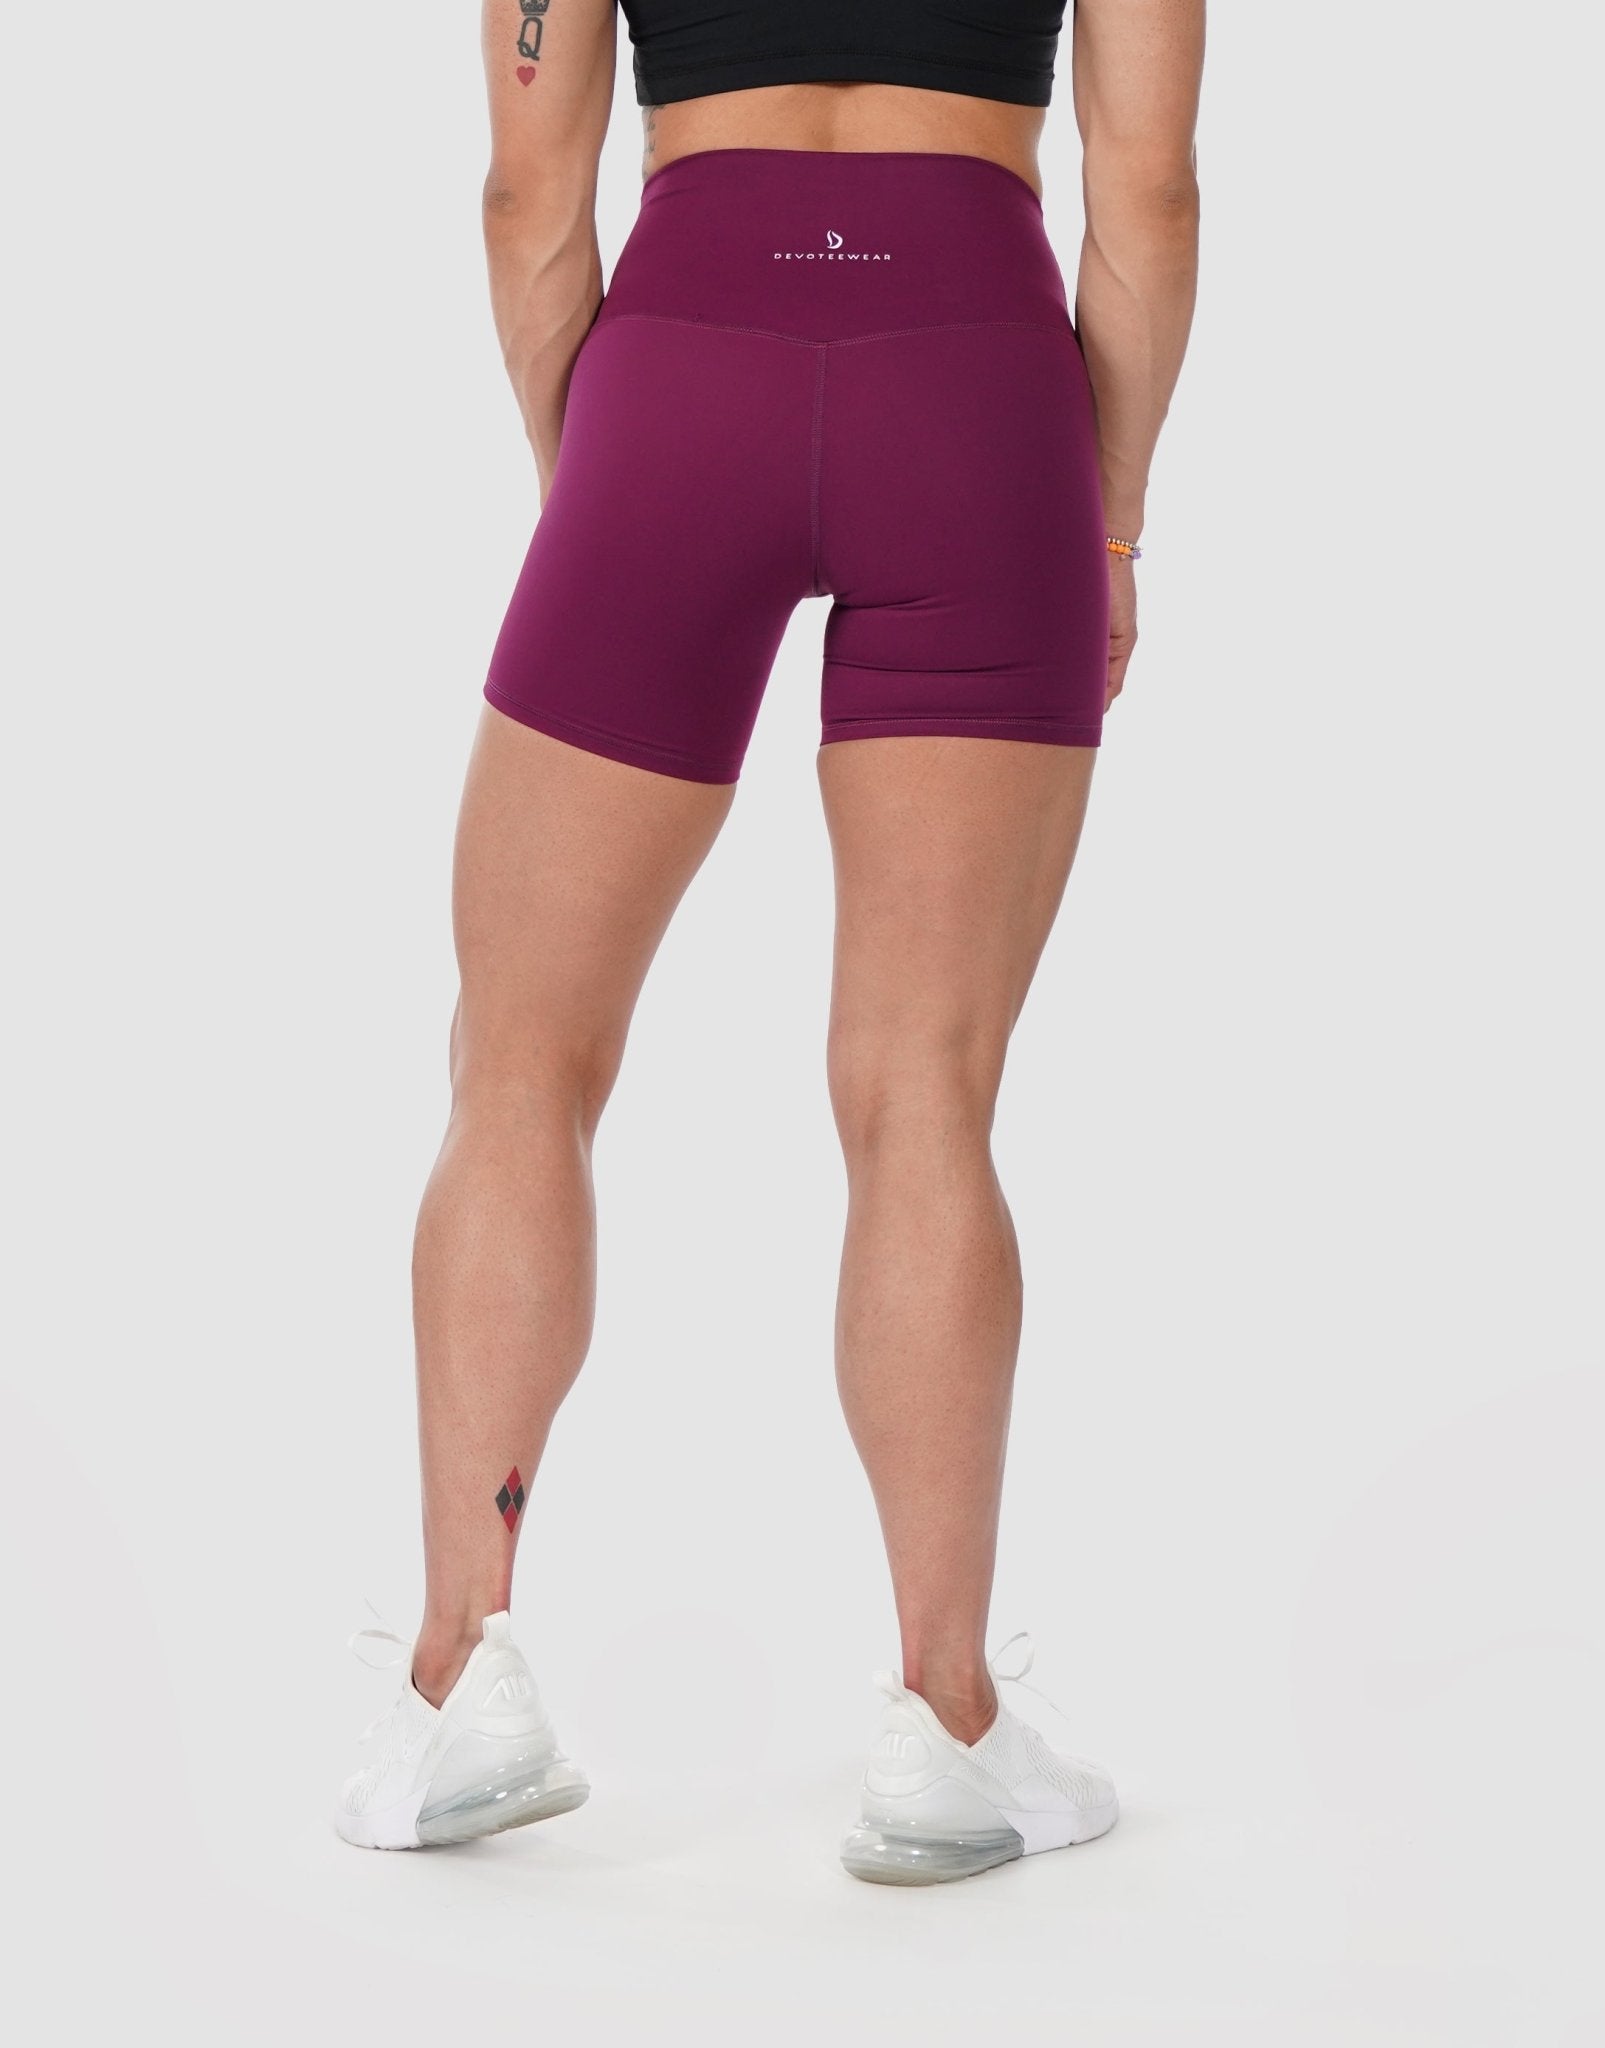 Danskin Now Sports High-waisted Shorts for Women